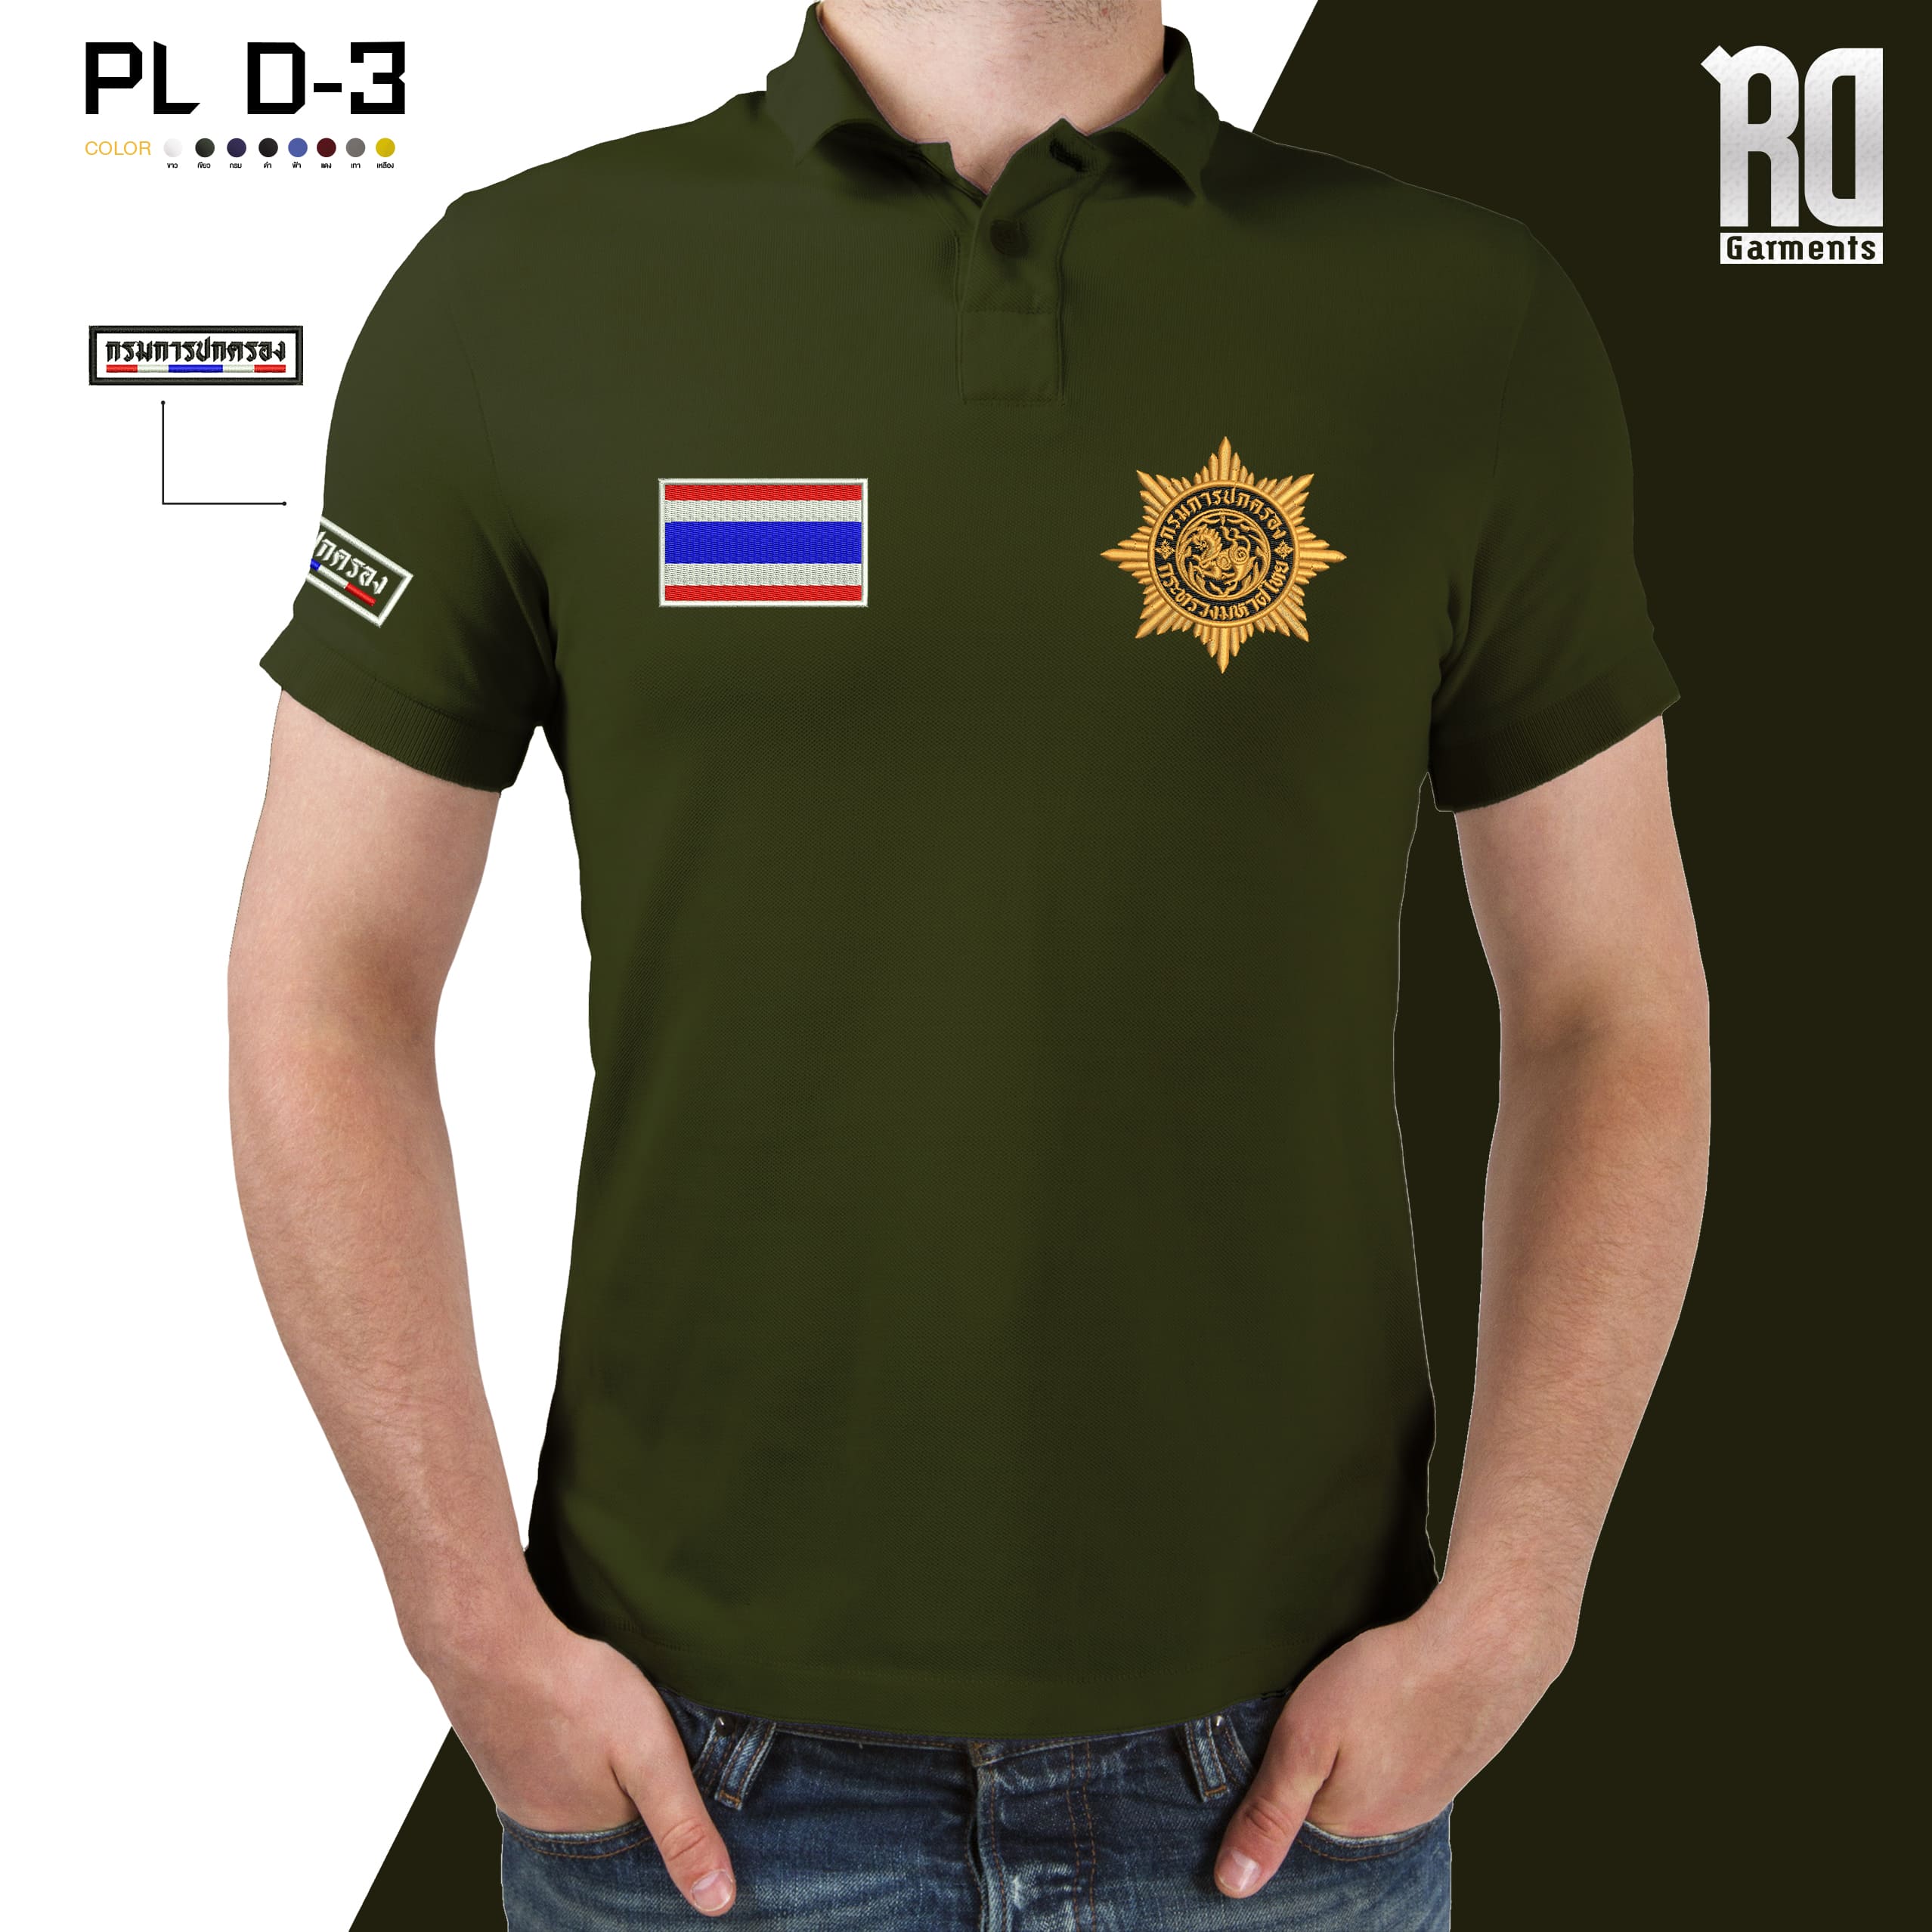 PL D-3 เสื้อโปโลกรมการปกครอง งานปัก